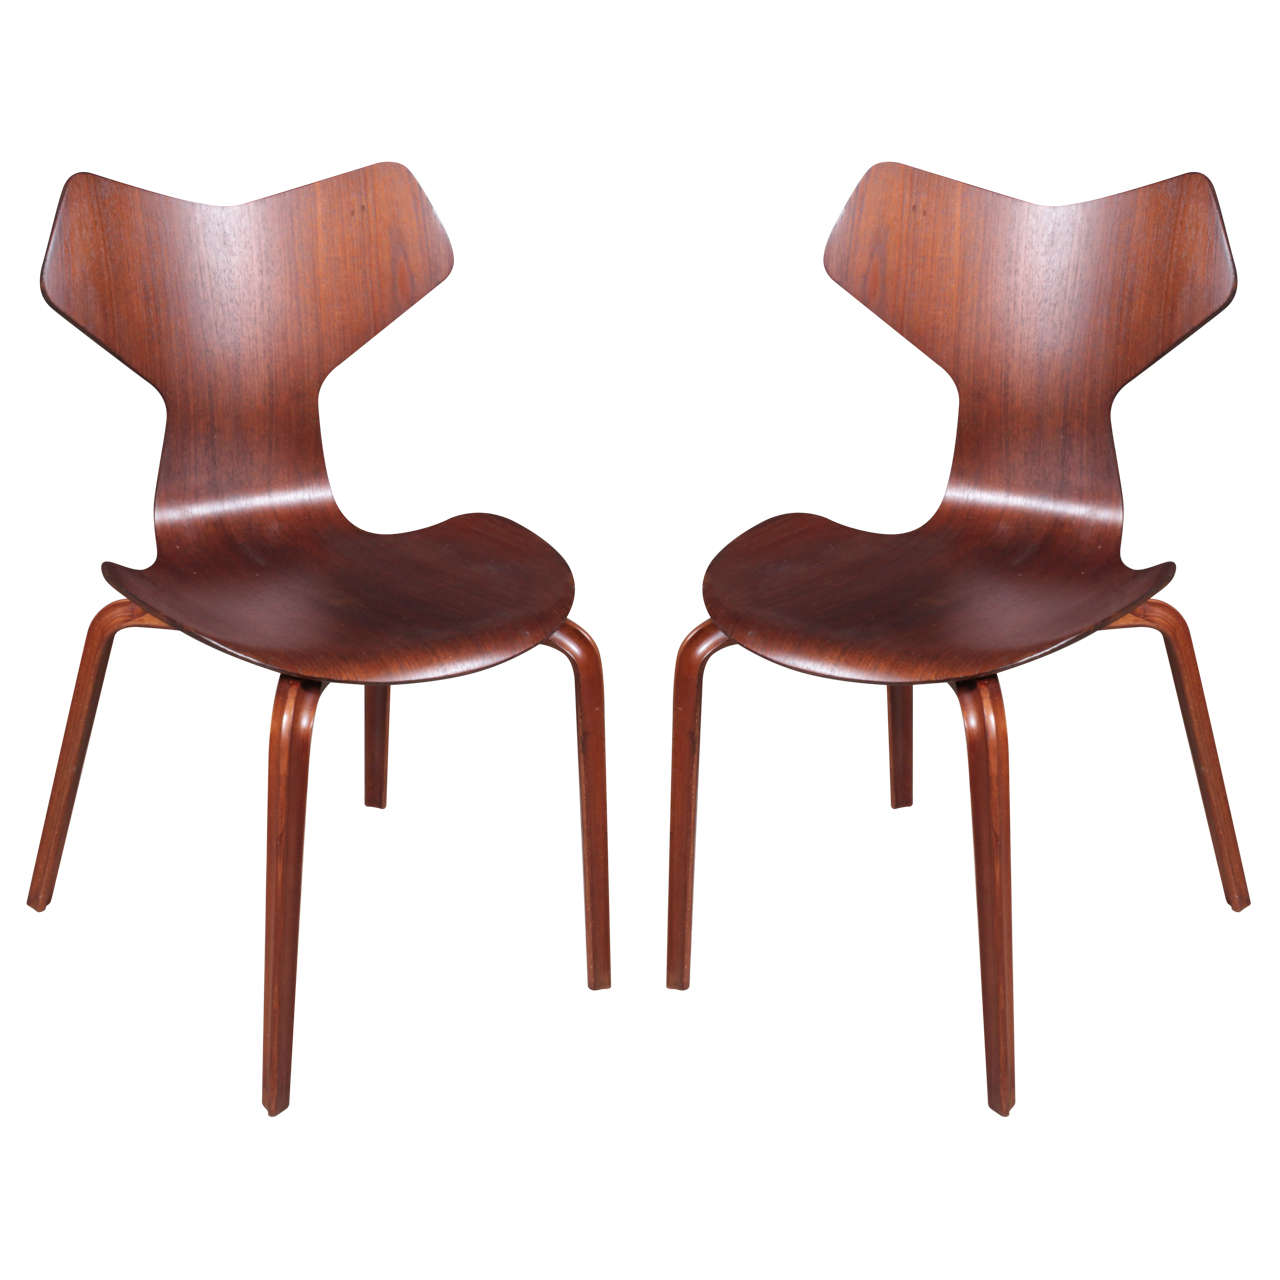 Arne Jacobsen "Grand Prix" Chairs